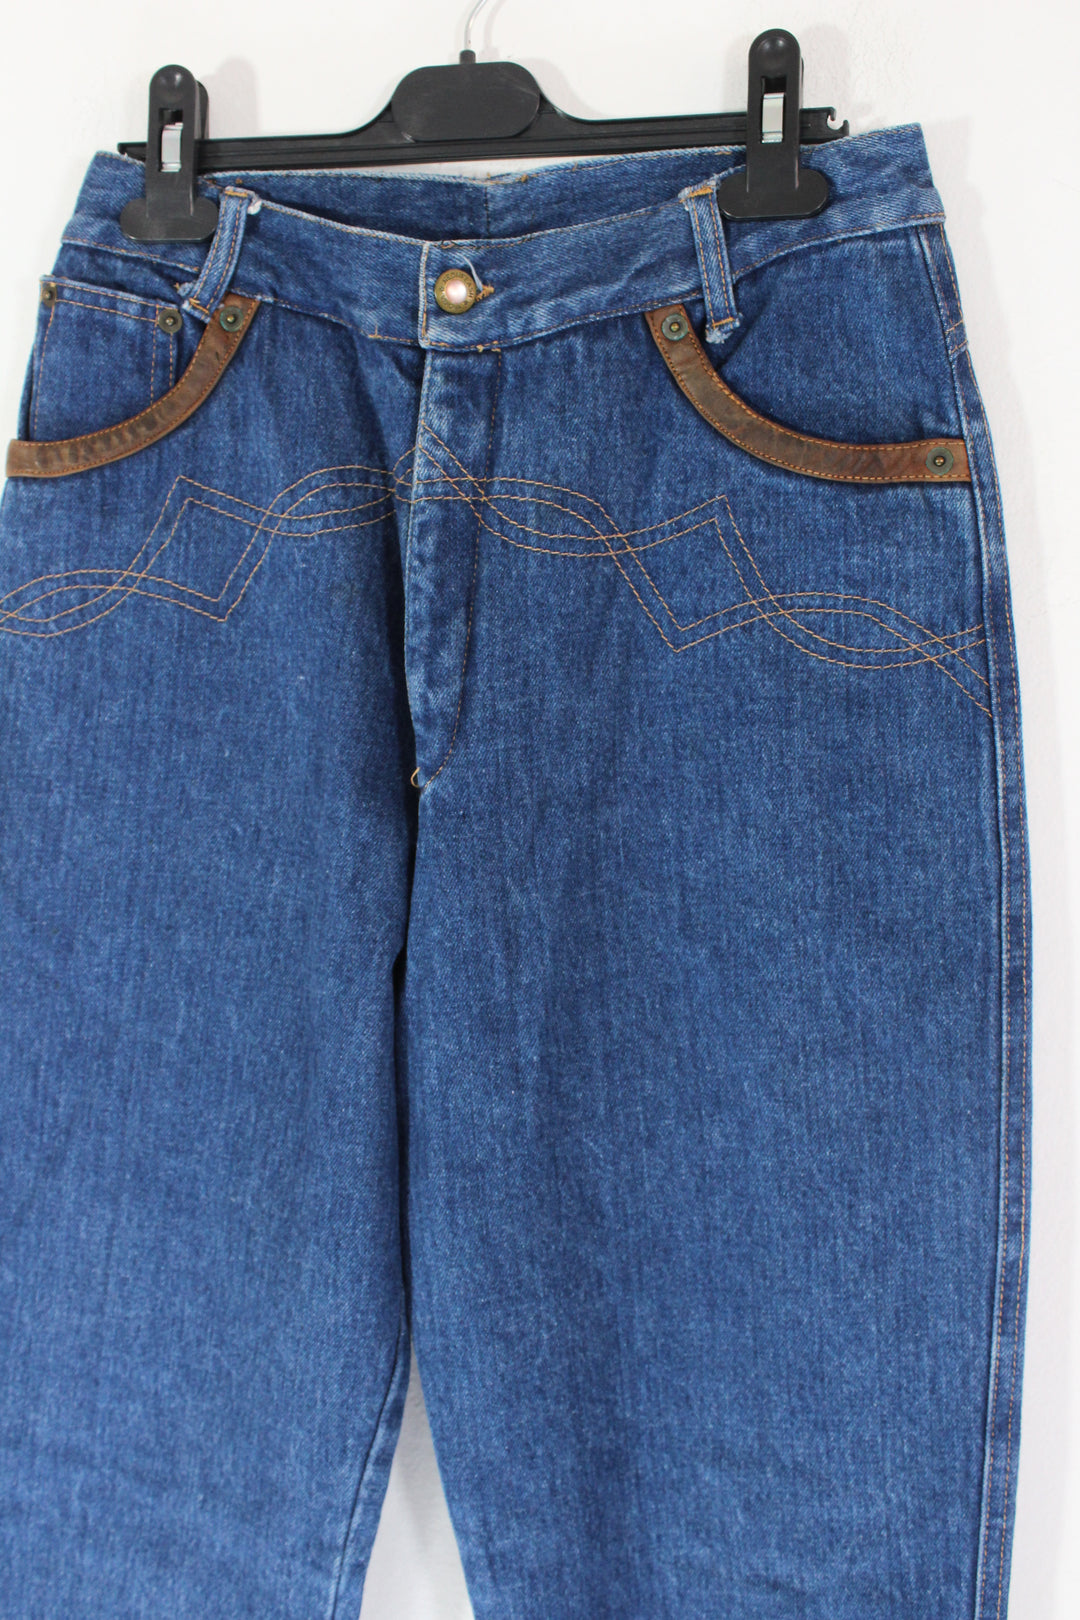 Vintage High Waisted Jeans Women's Medium(38)